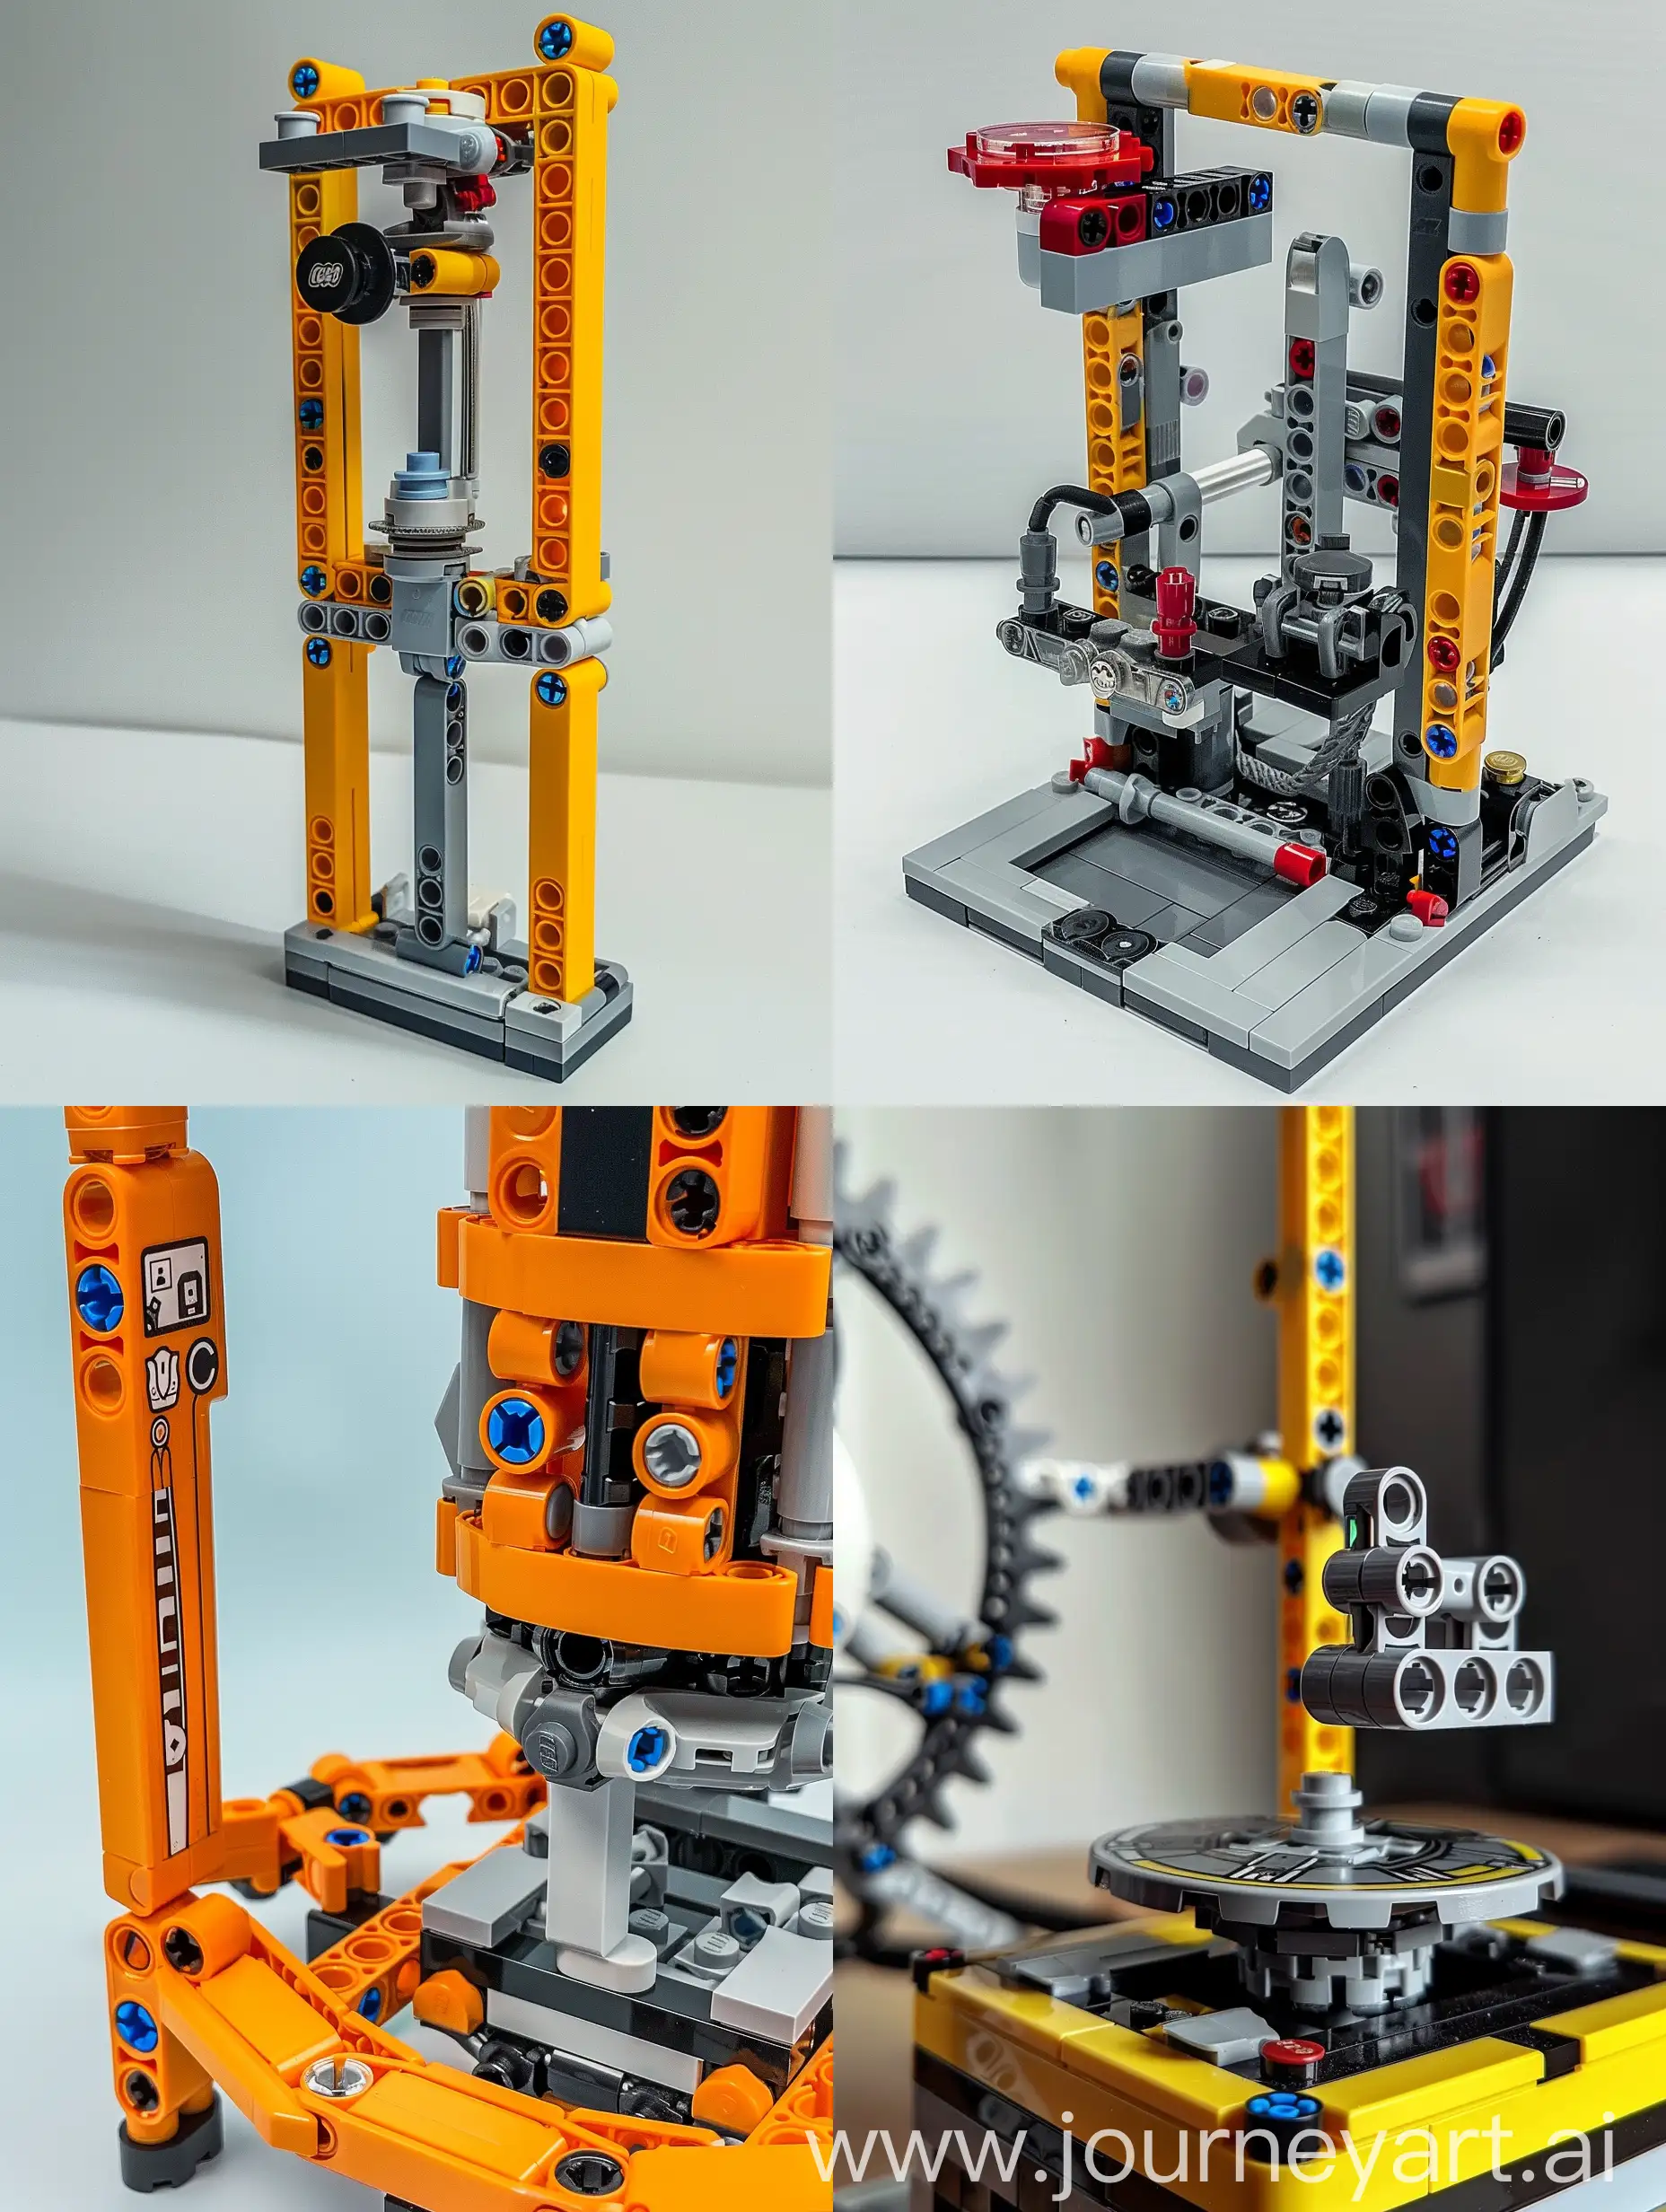 A simple Lego Technic mechanism